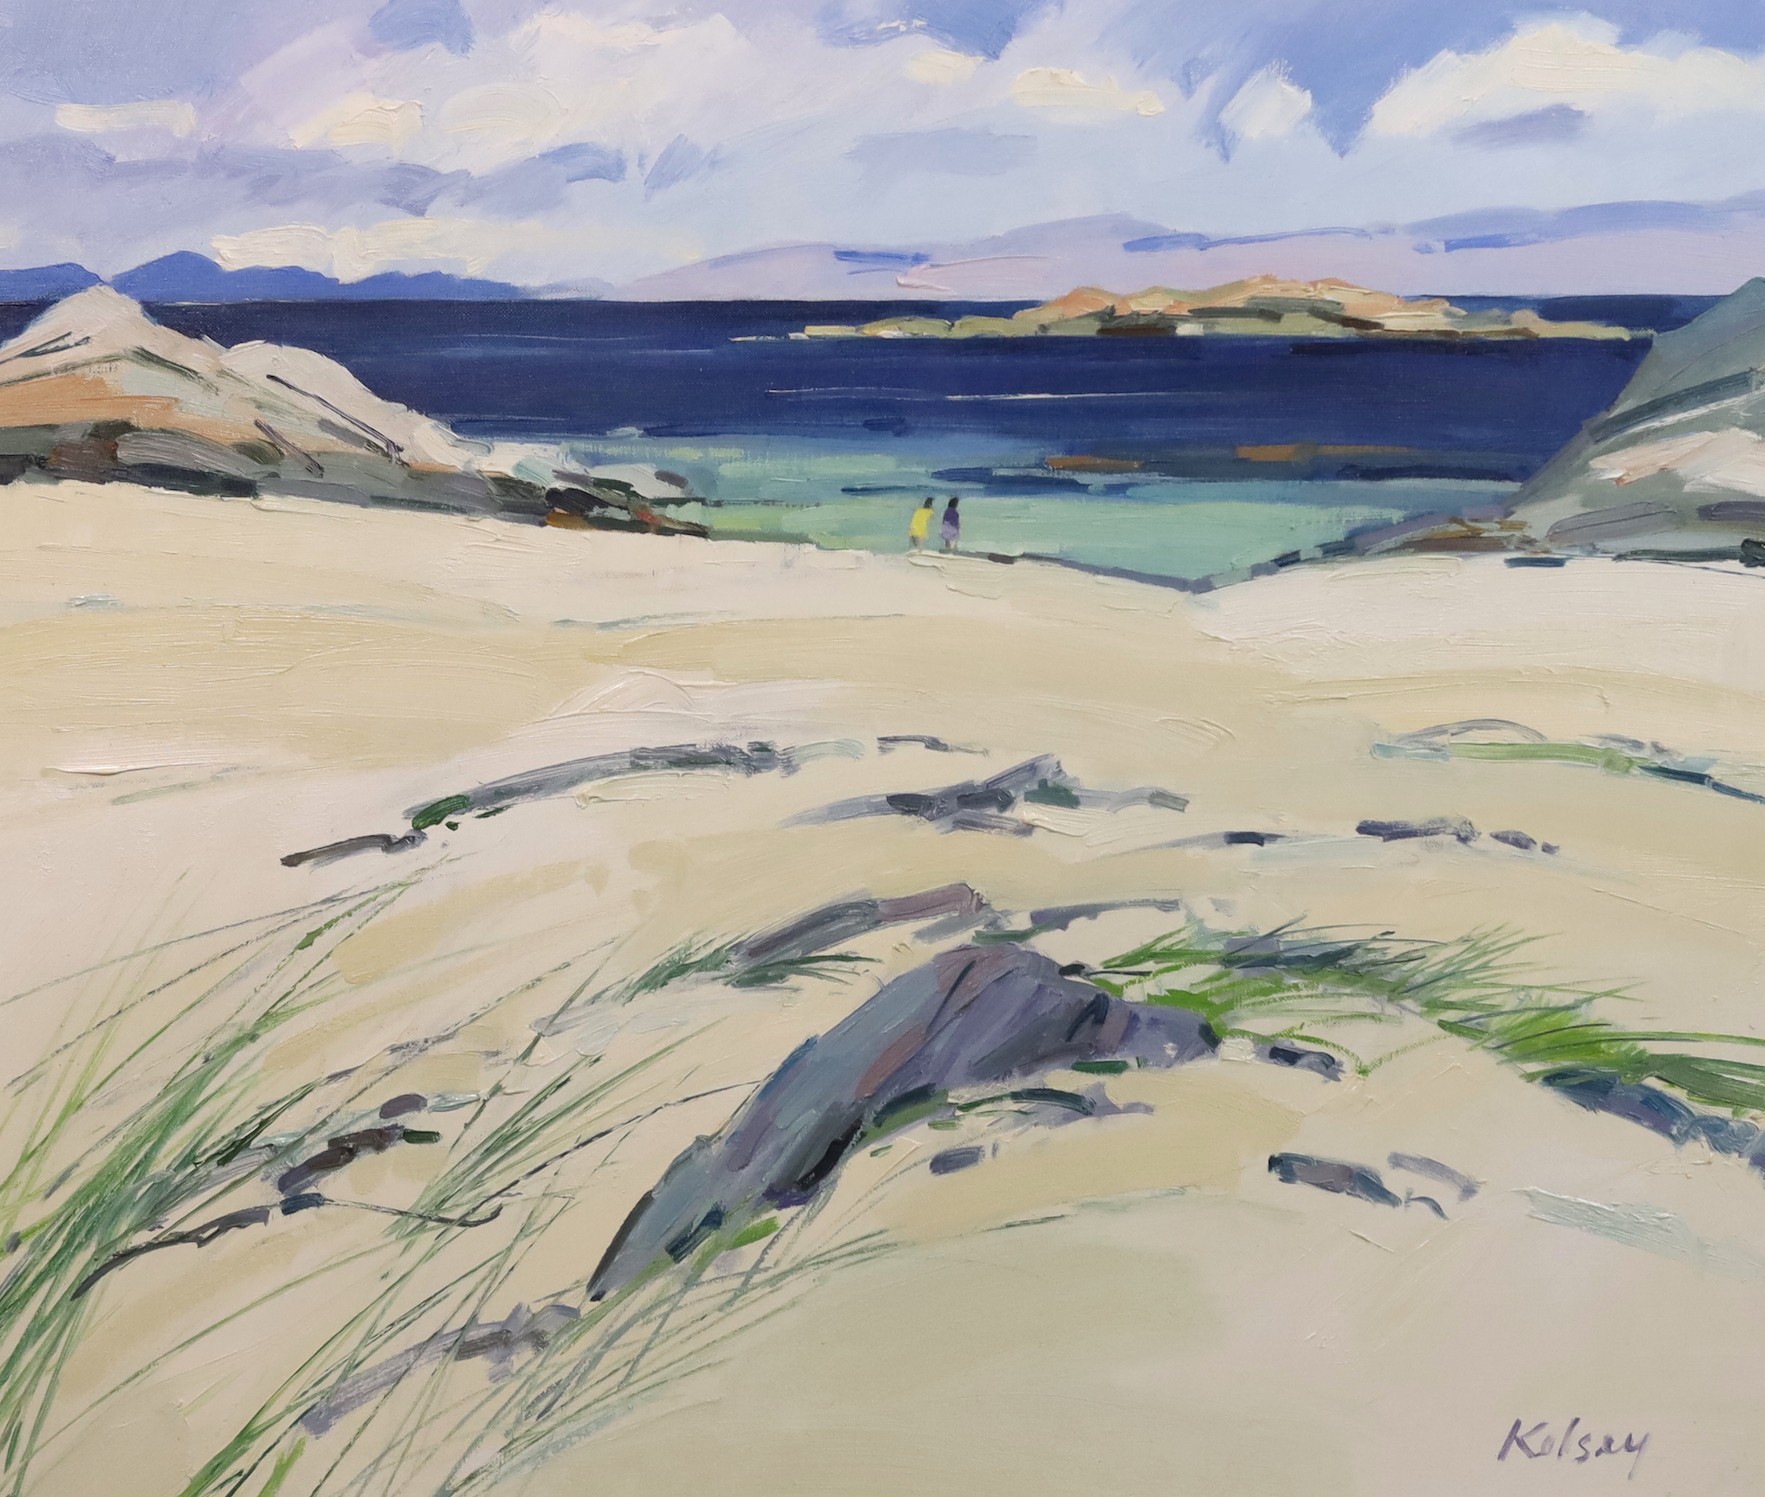 Robert Kelsey (Scottish, b.1949), 'Sunny beach - Iona', oil on canvas, 60 x 70cm